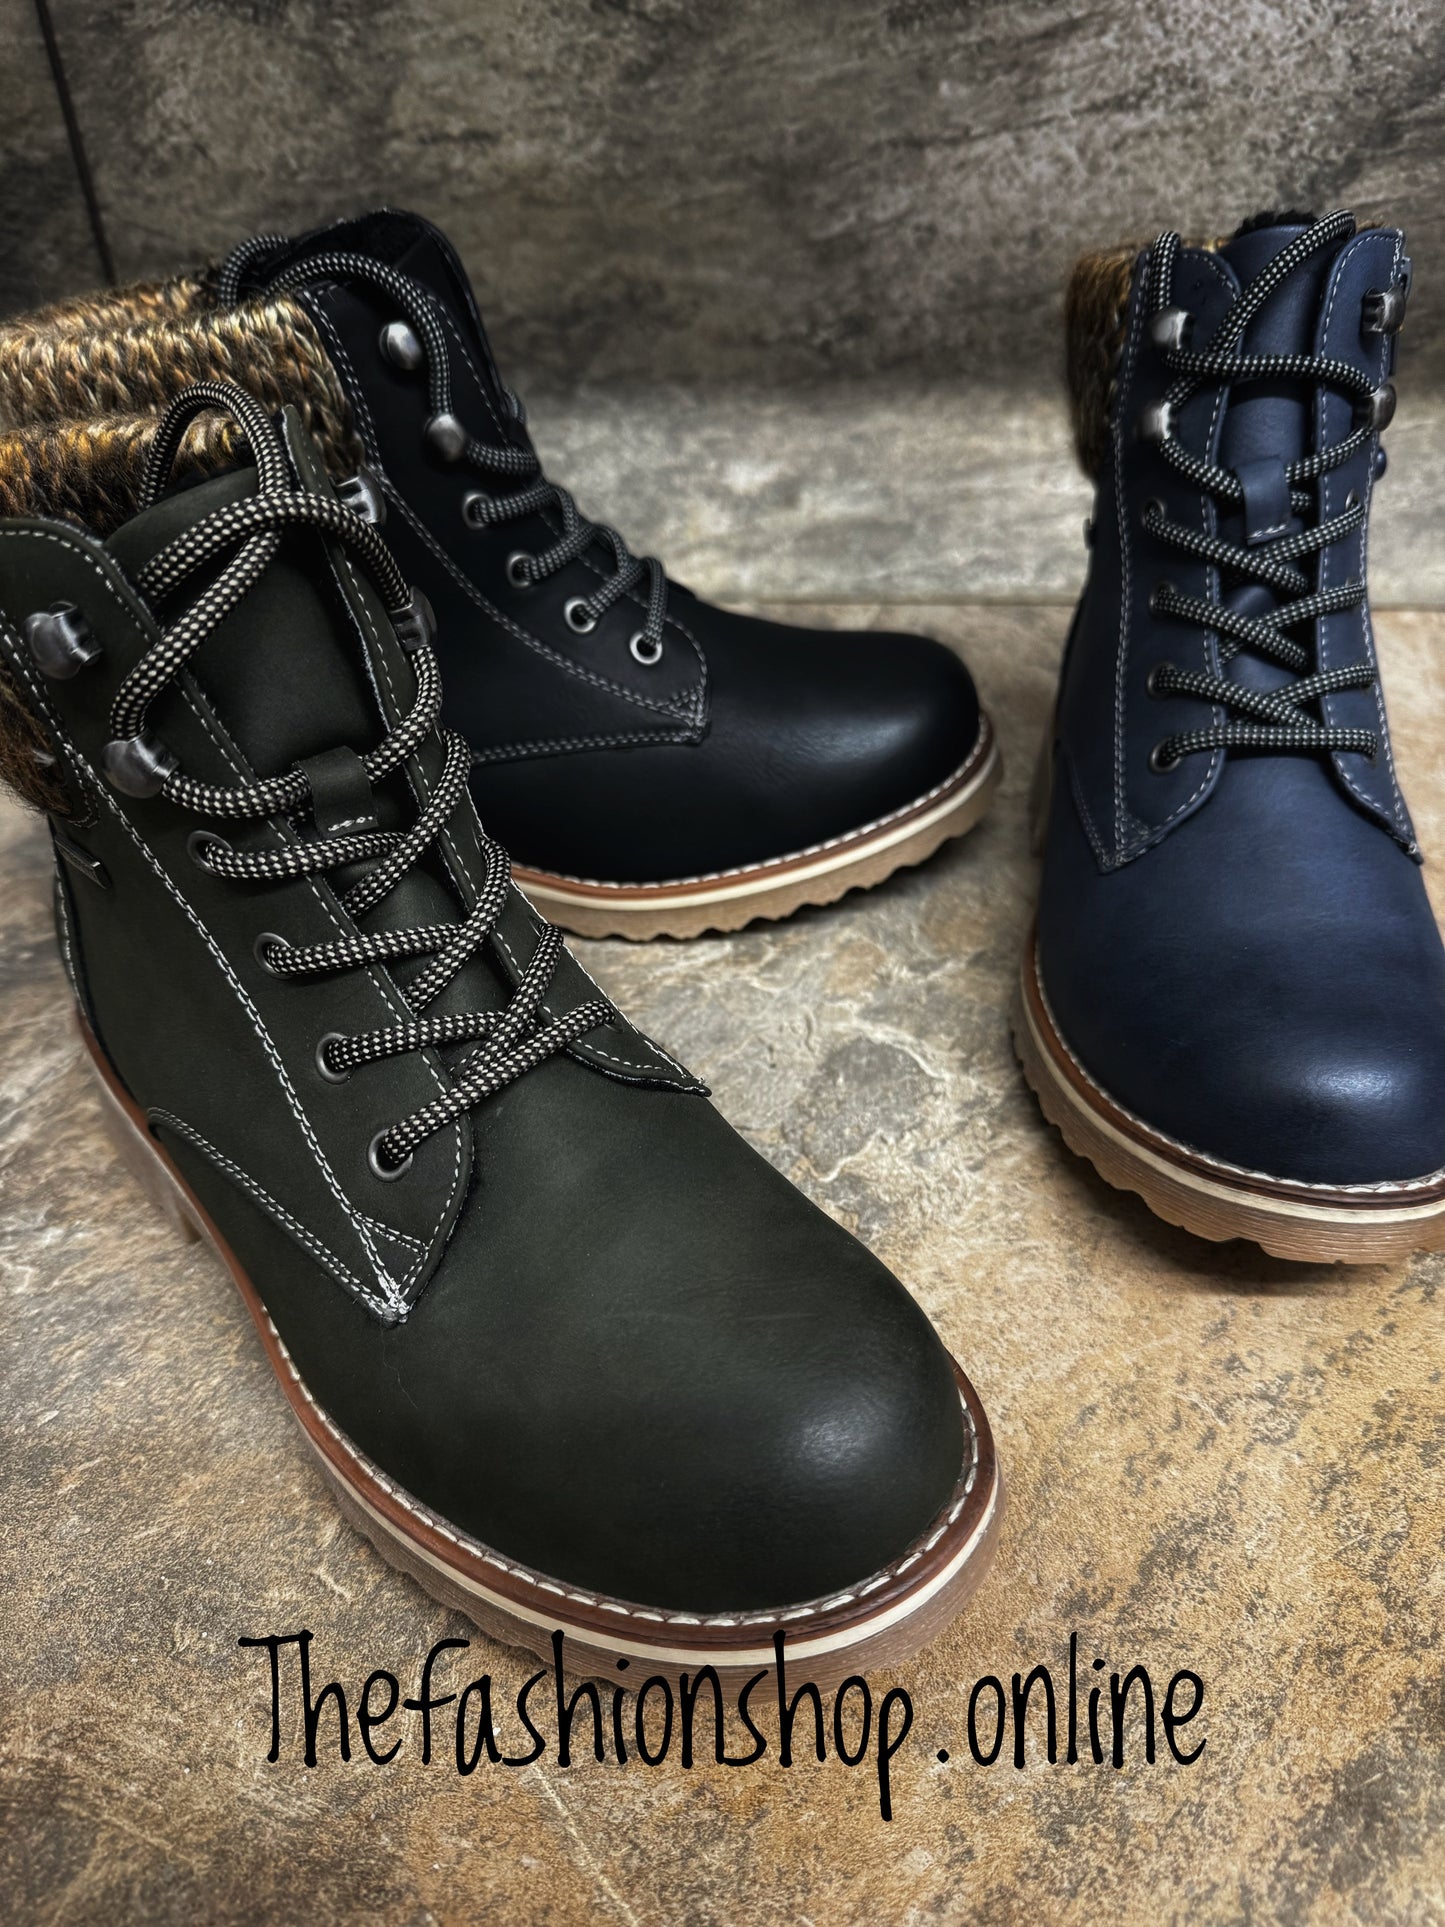 Lunar black Dallas waterproof ankle boots sizes 4-8